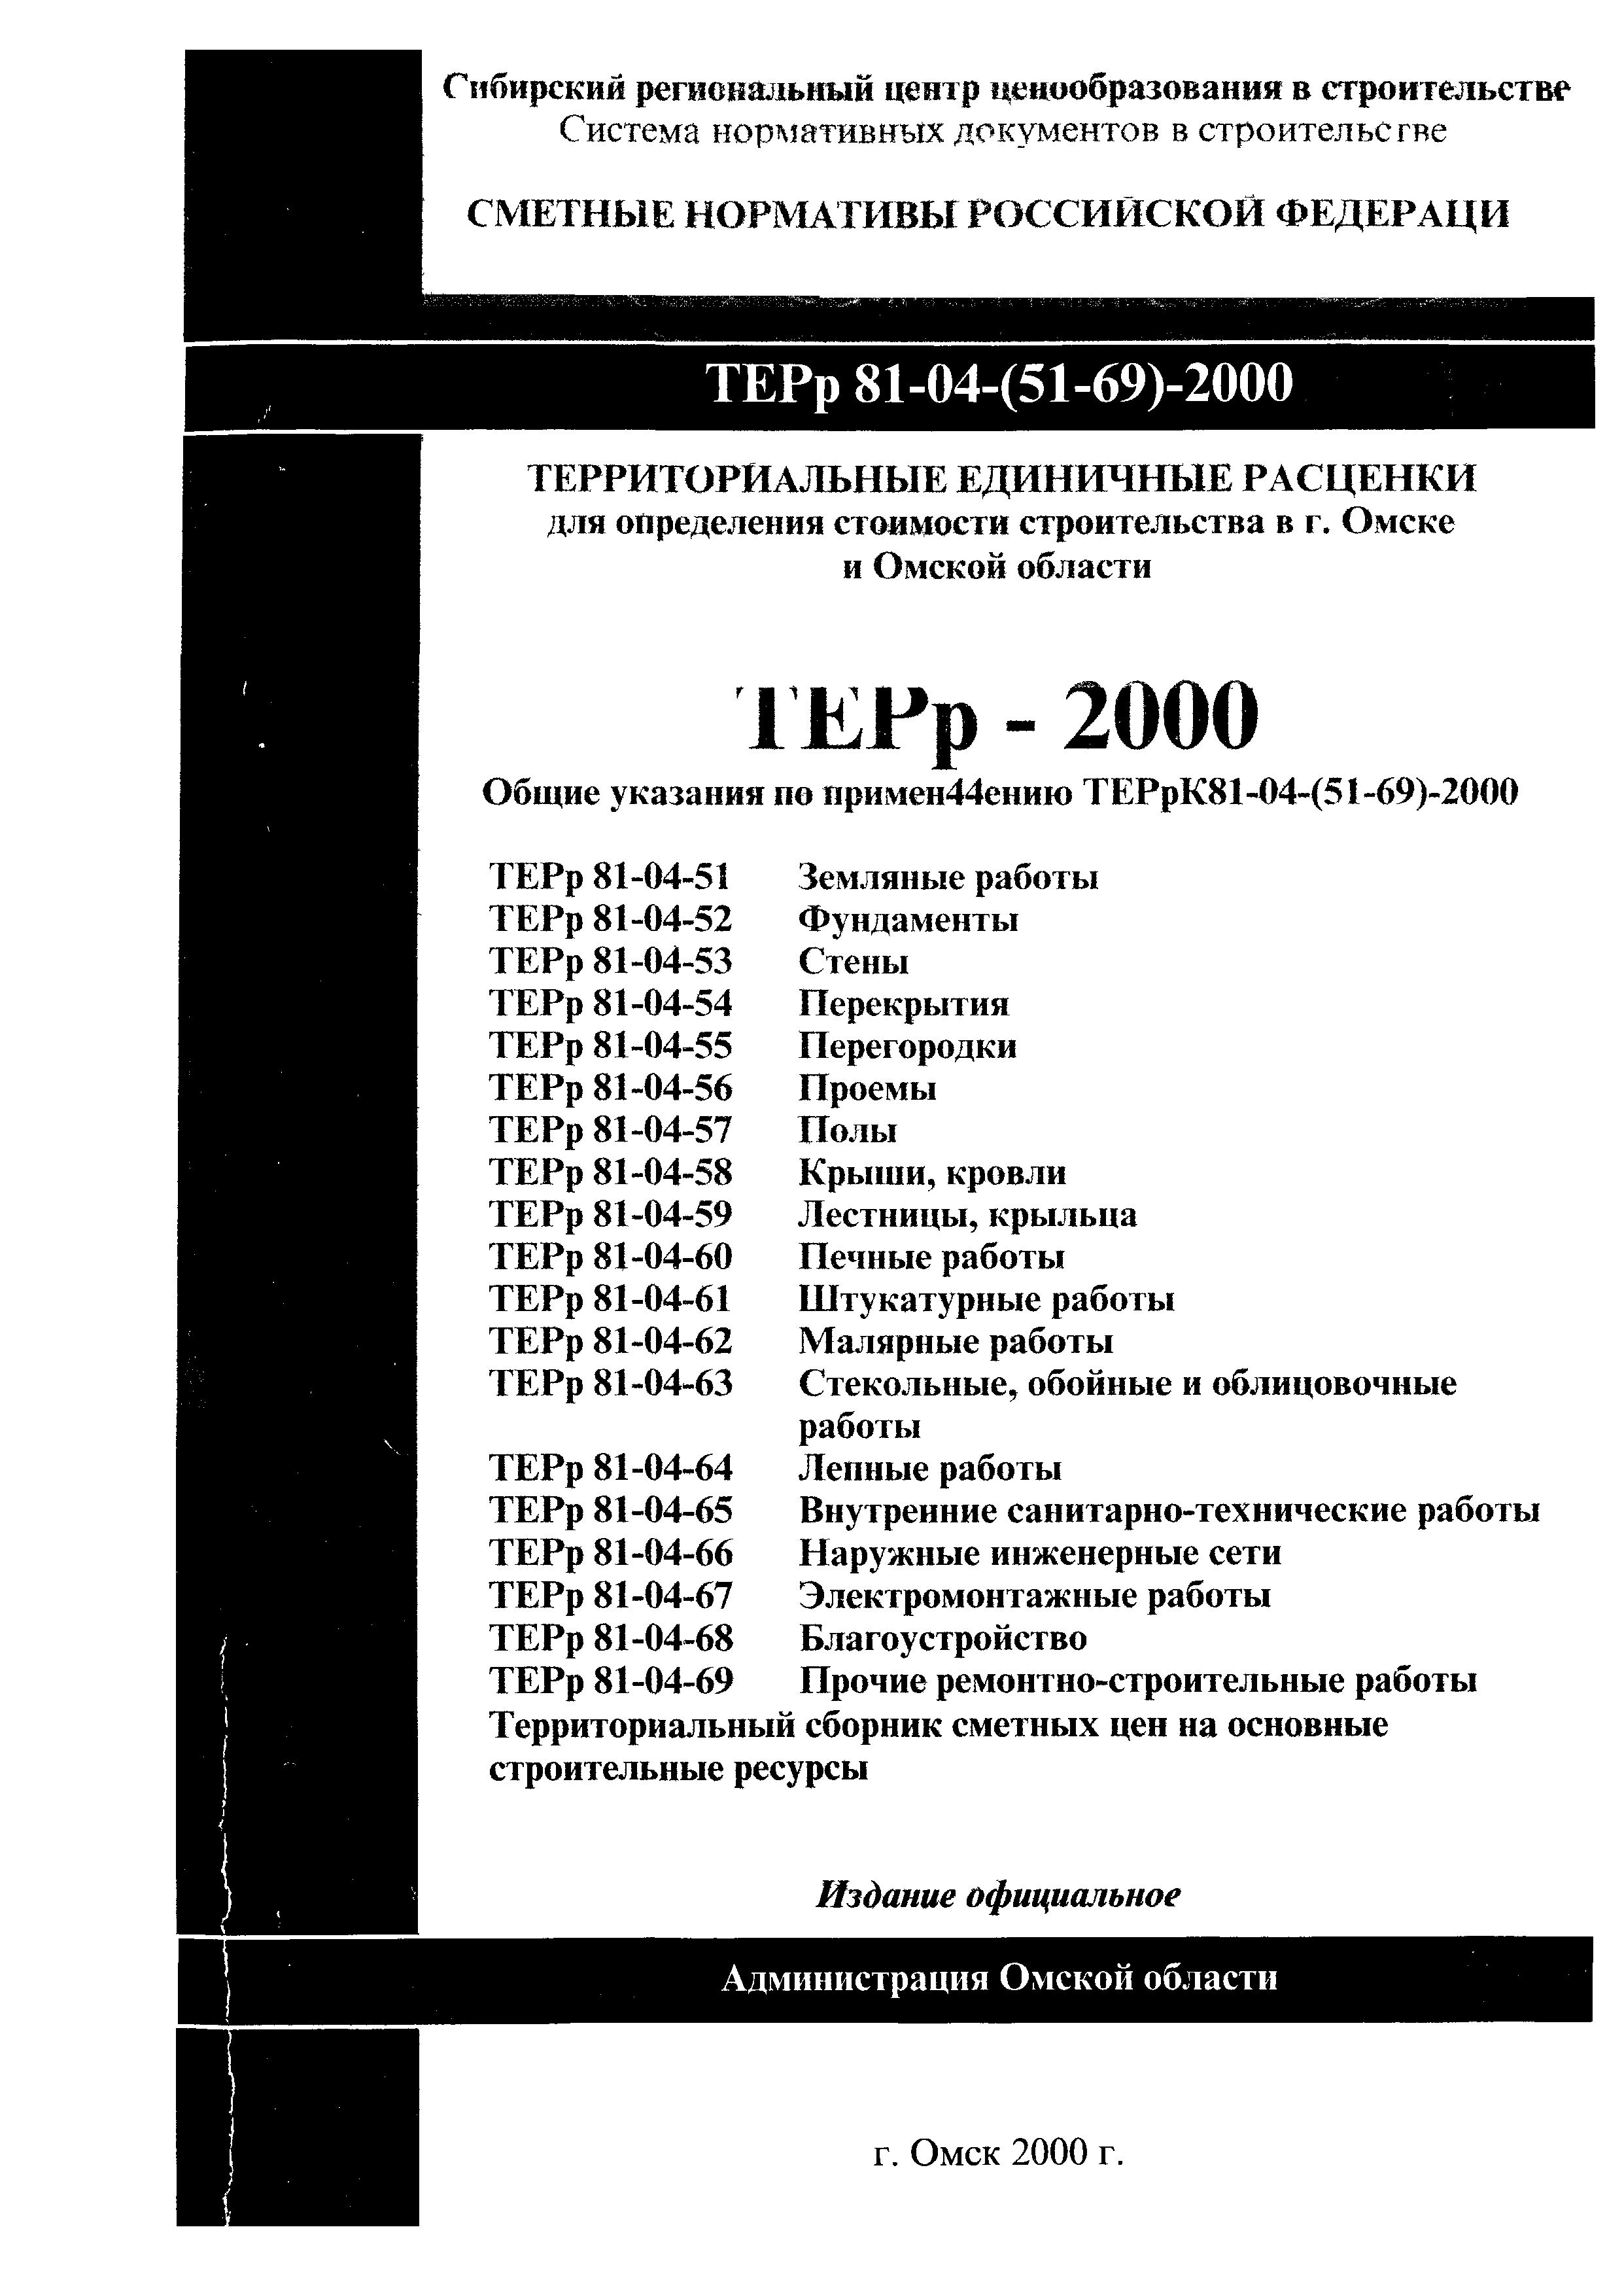 ТЕРр Омской области 2000-58